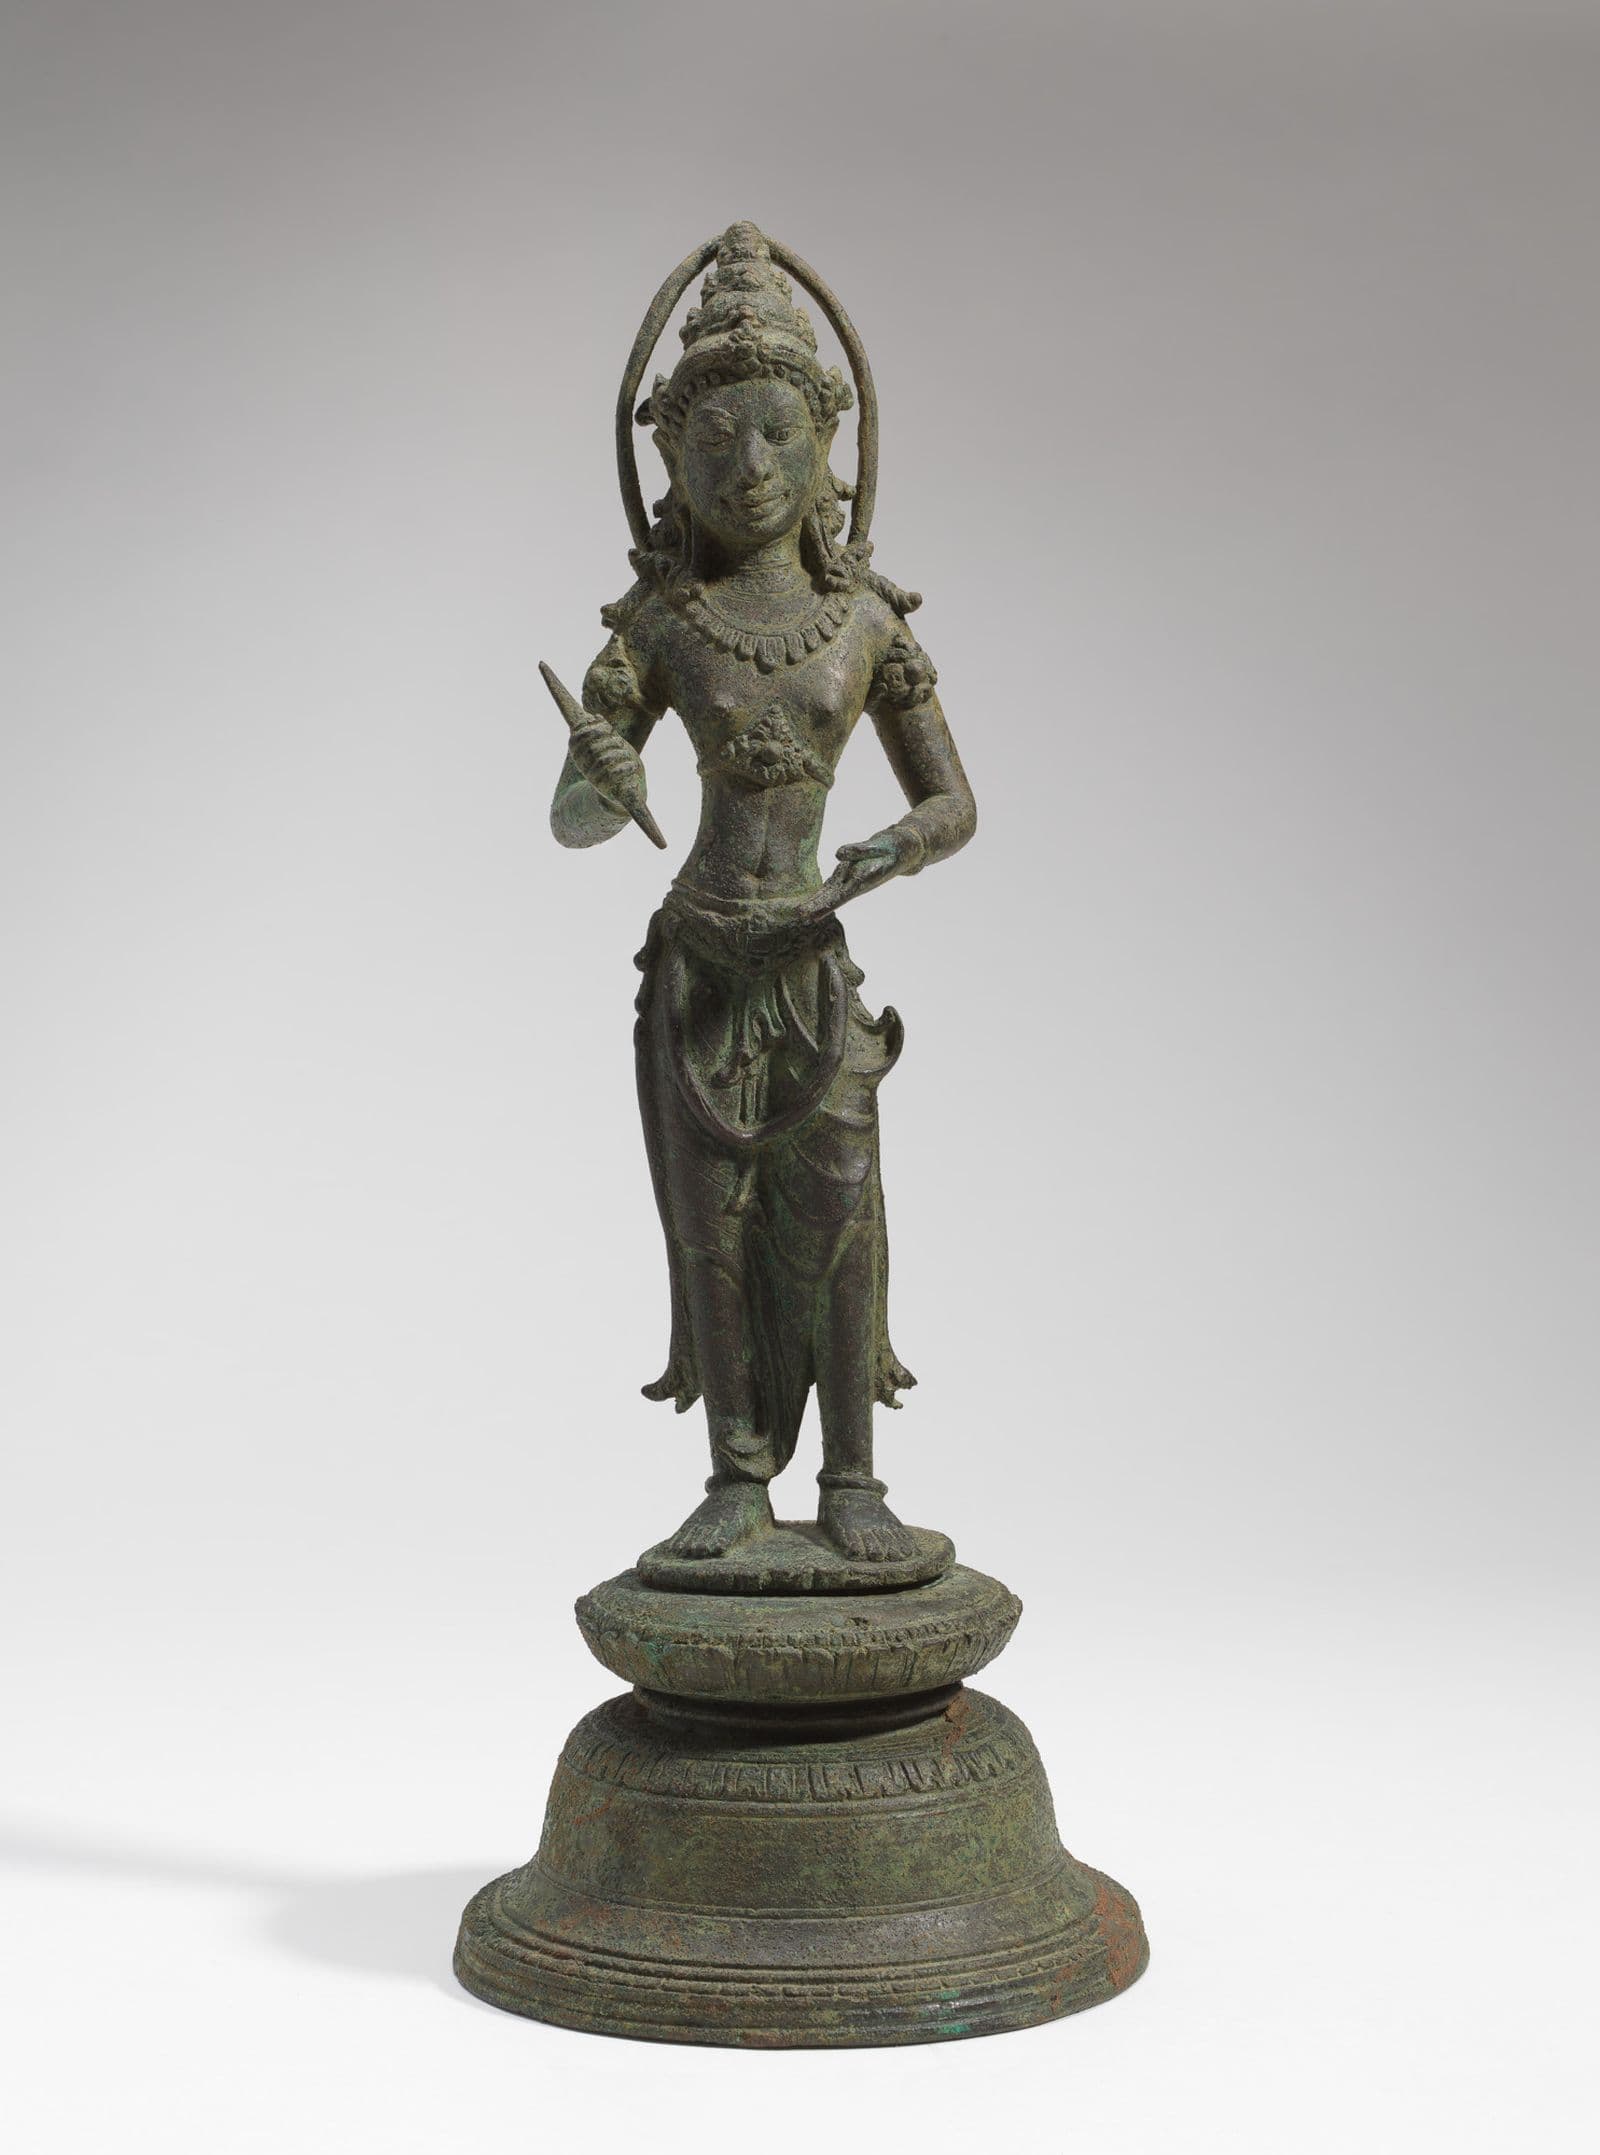 A bronze sculpture of a Cambodian deity